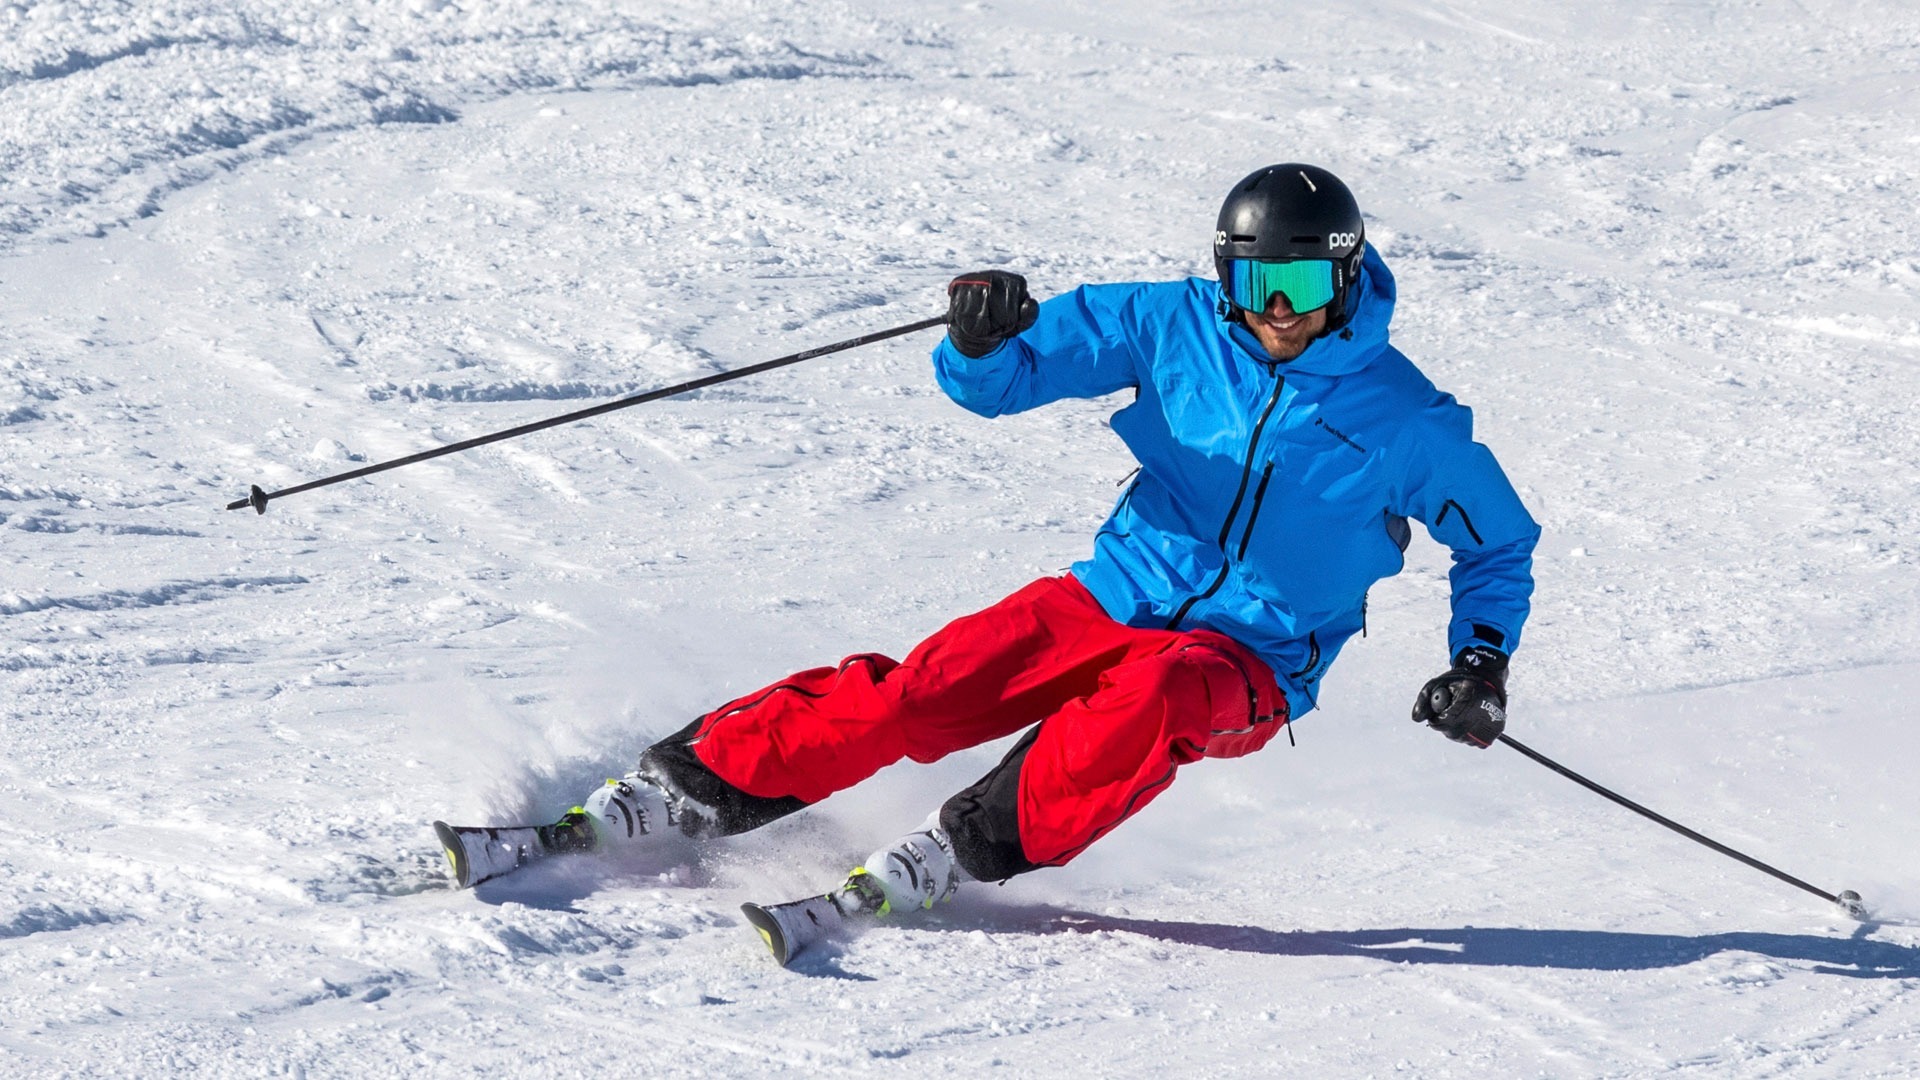 skifahren Splügen Saisonkarte